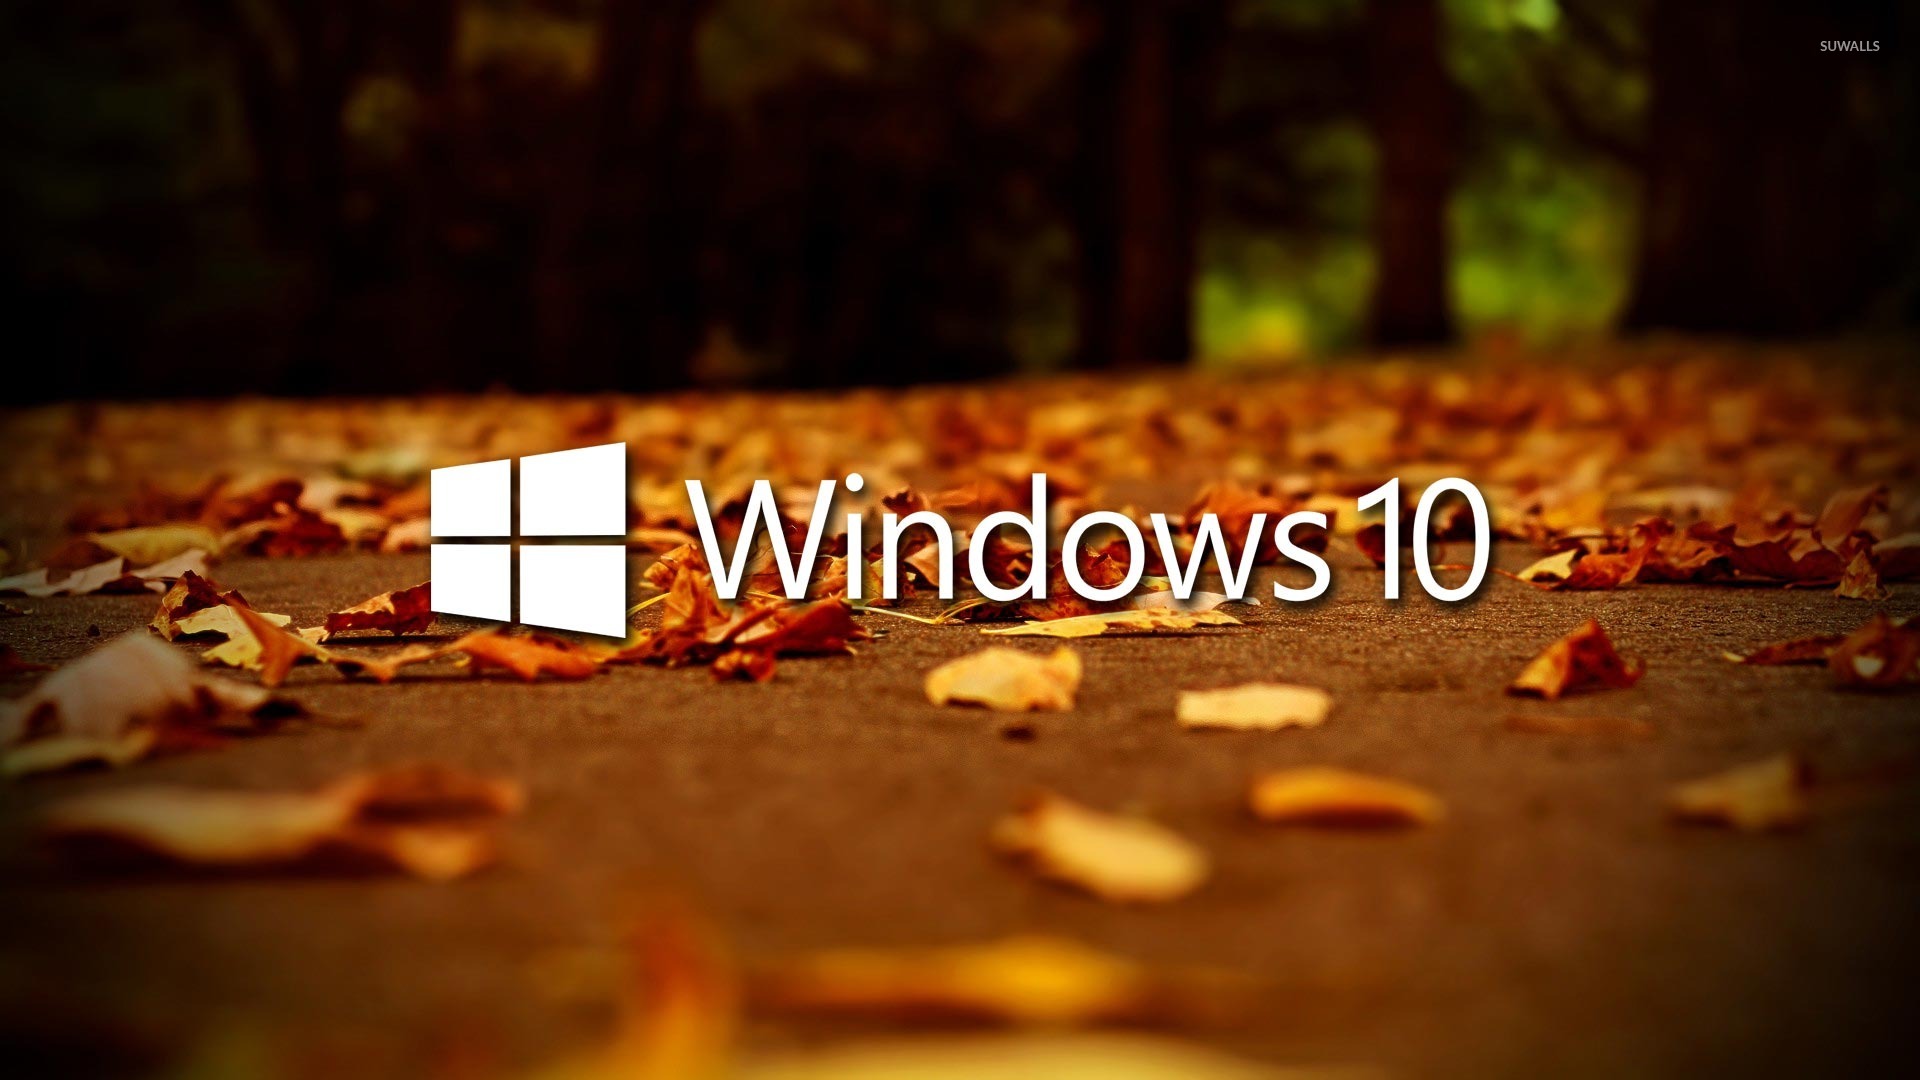 Windows 10 on autumn leaves [2] wallpaper wallpaper